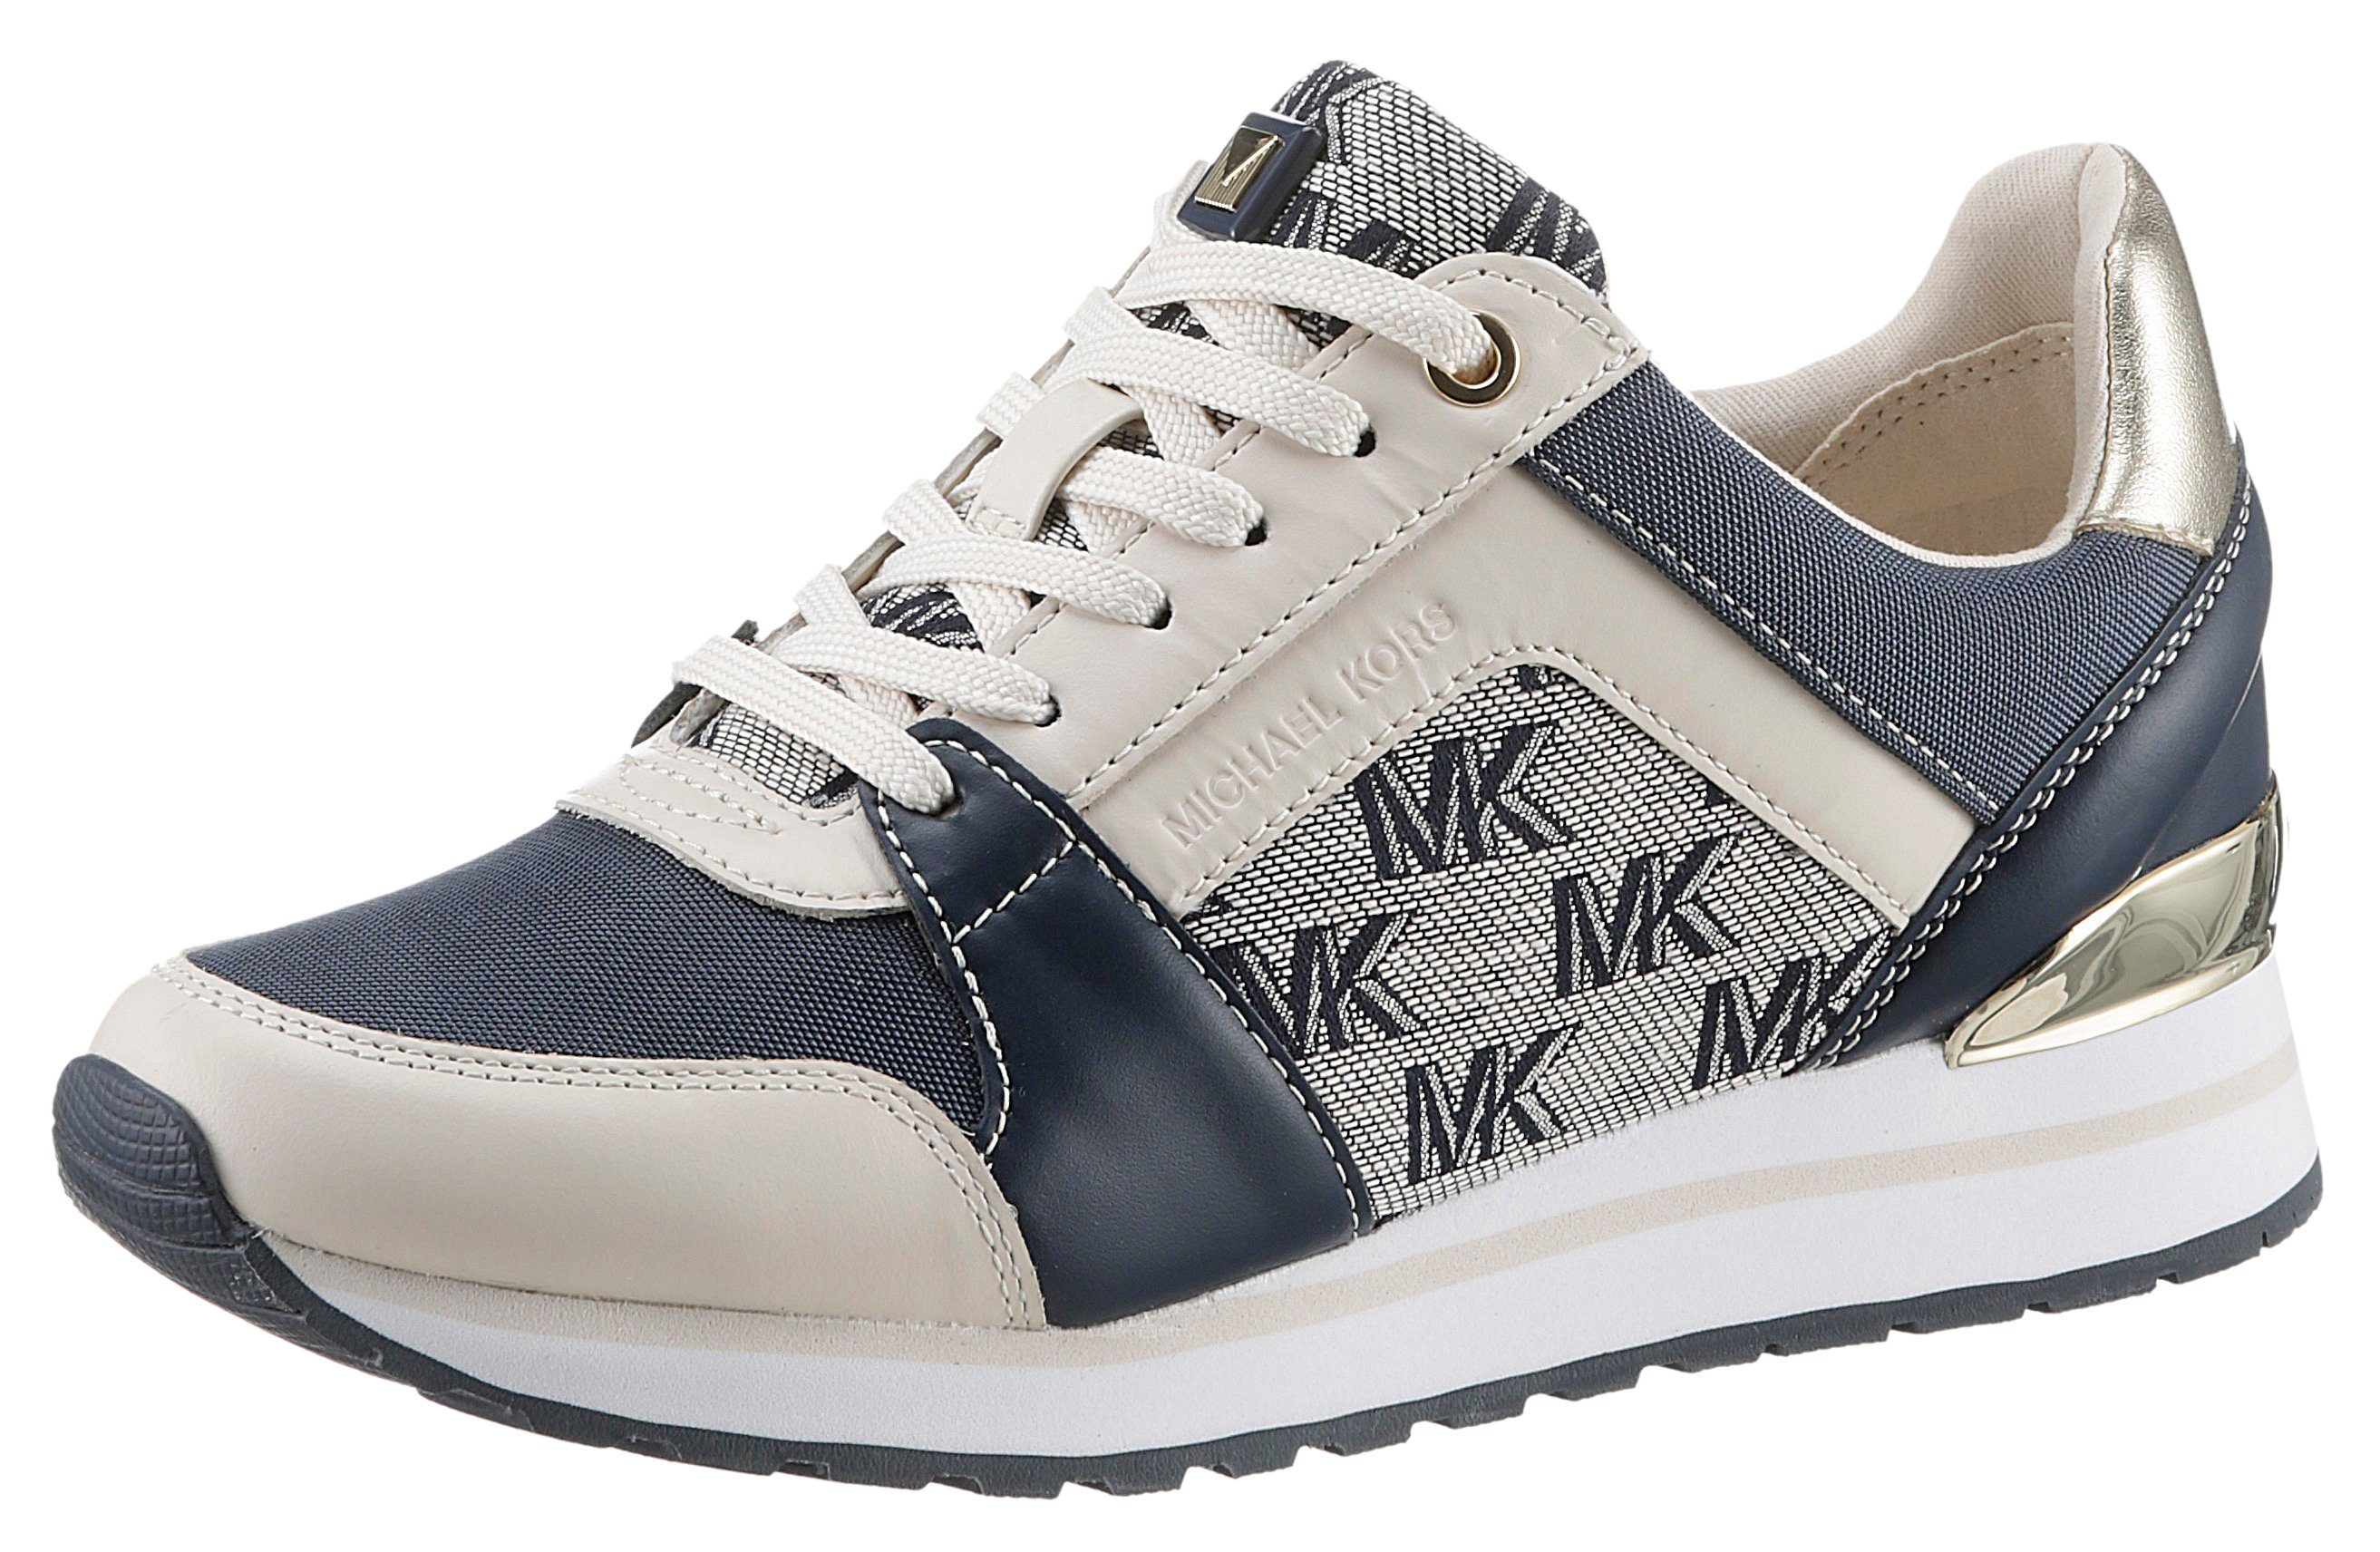 MICHAEL KORS BILLIE TRAINER Sneaker mit MK-Monogramm-Print